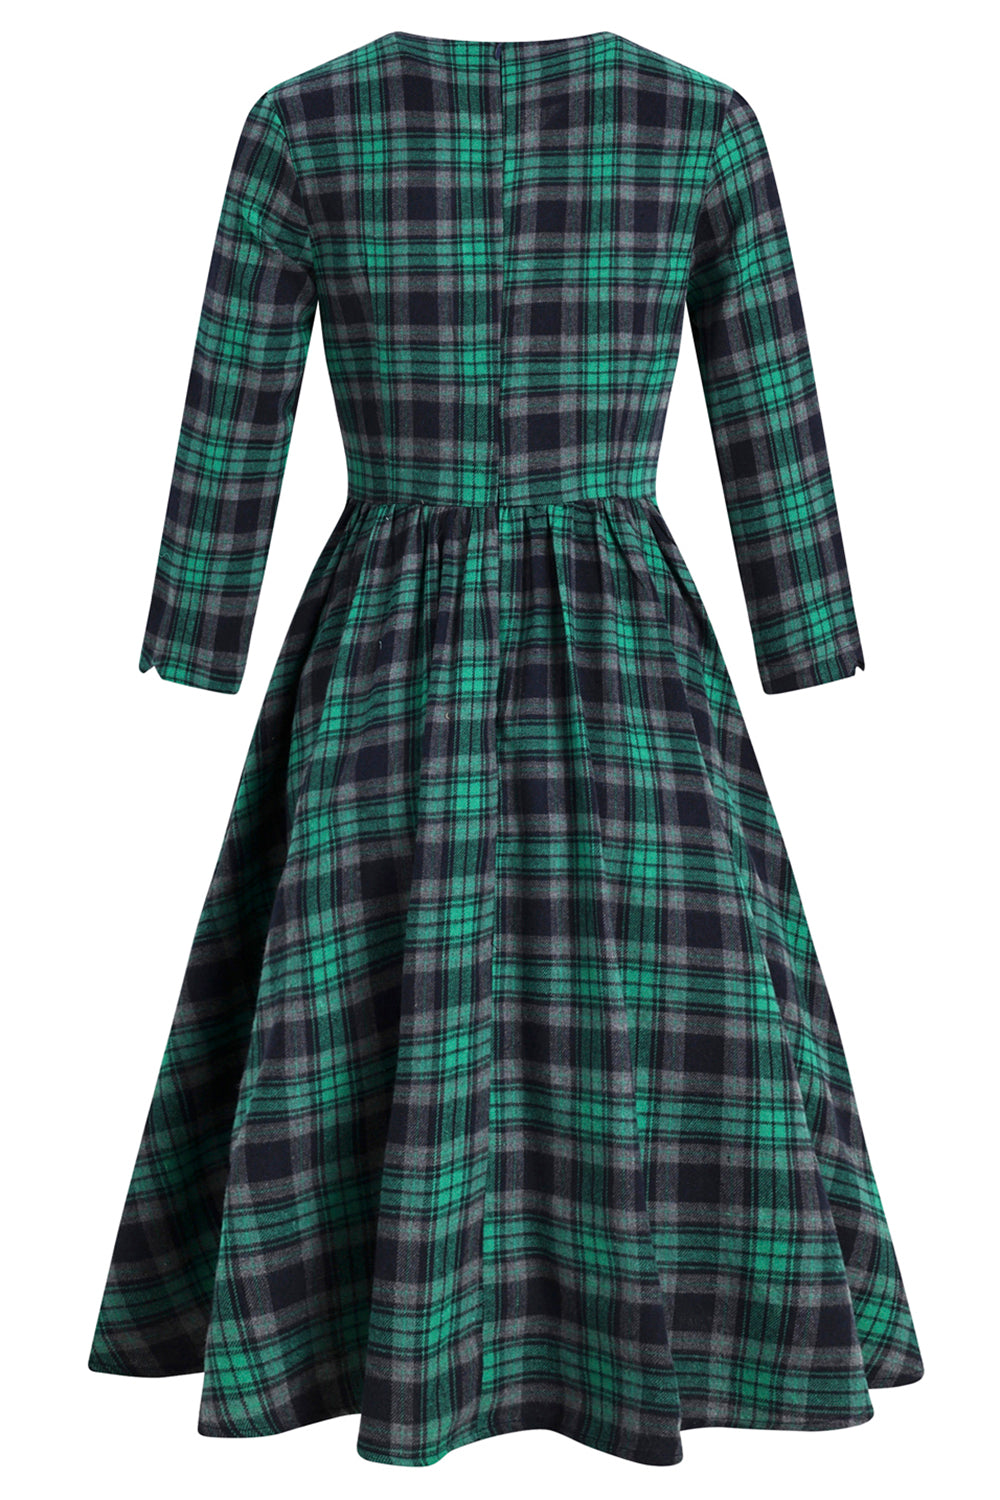 Zapaka Women Vintage Dress Green V Neck Plaid Long Sleeves 1950s Dress ...